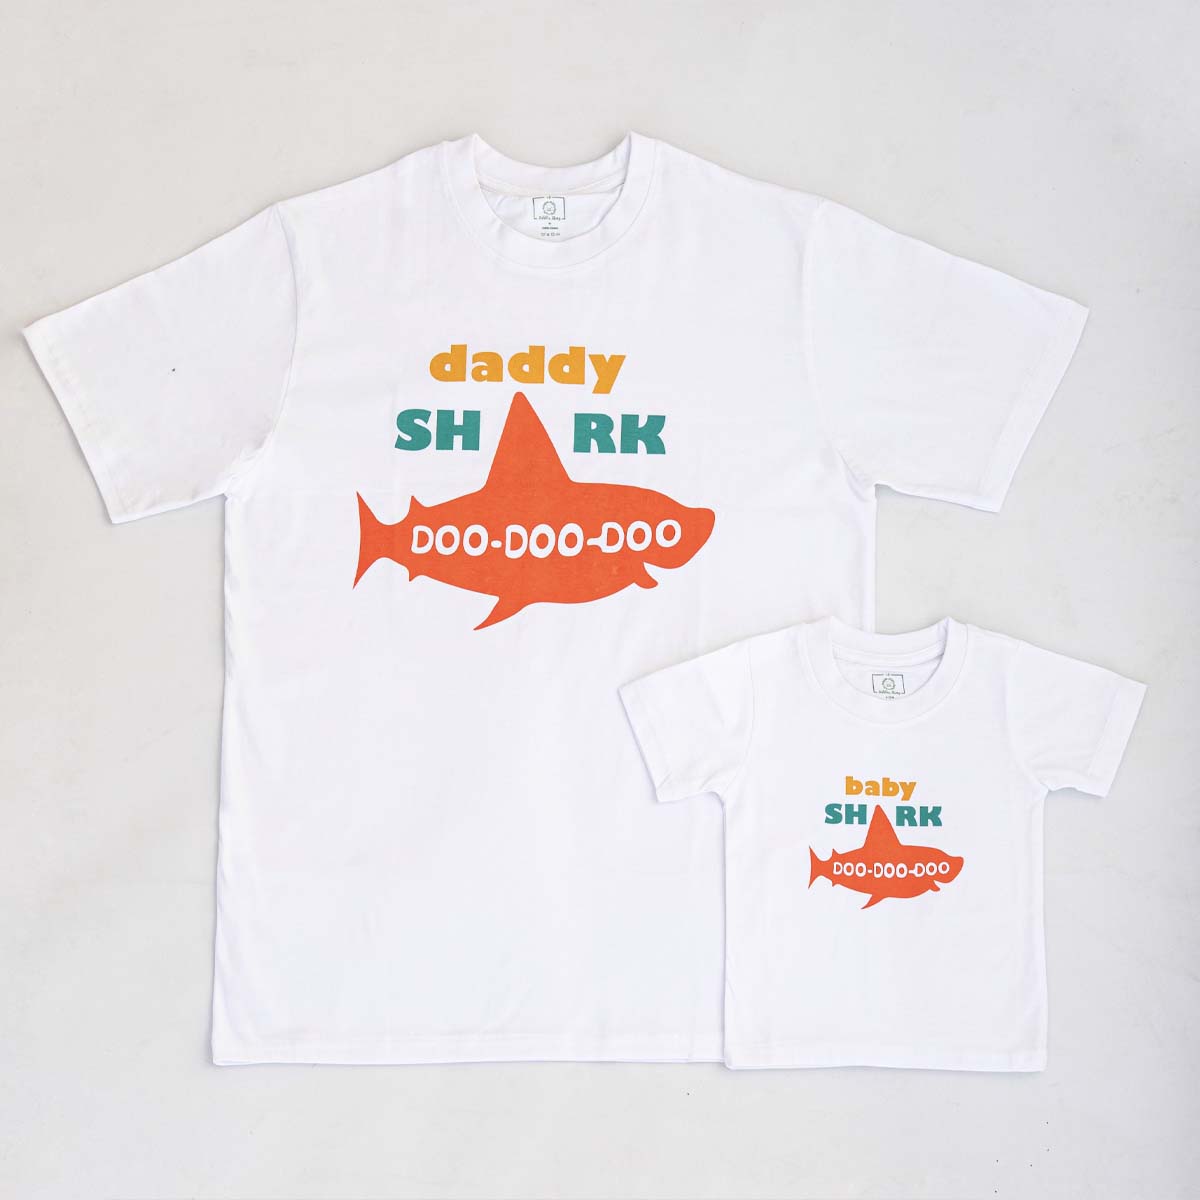 Dad and Me Shark T-shirts